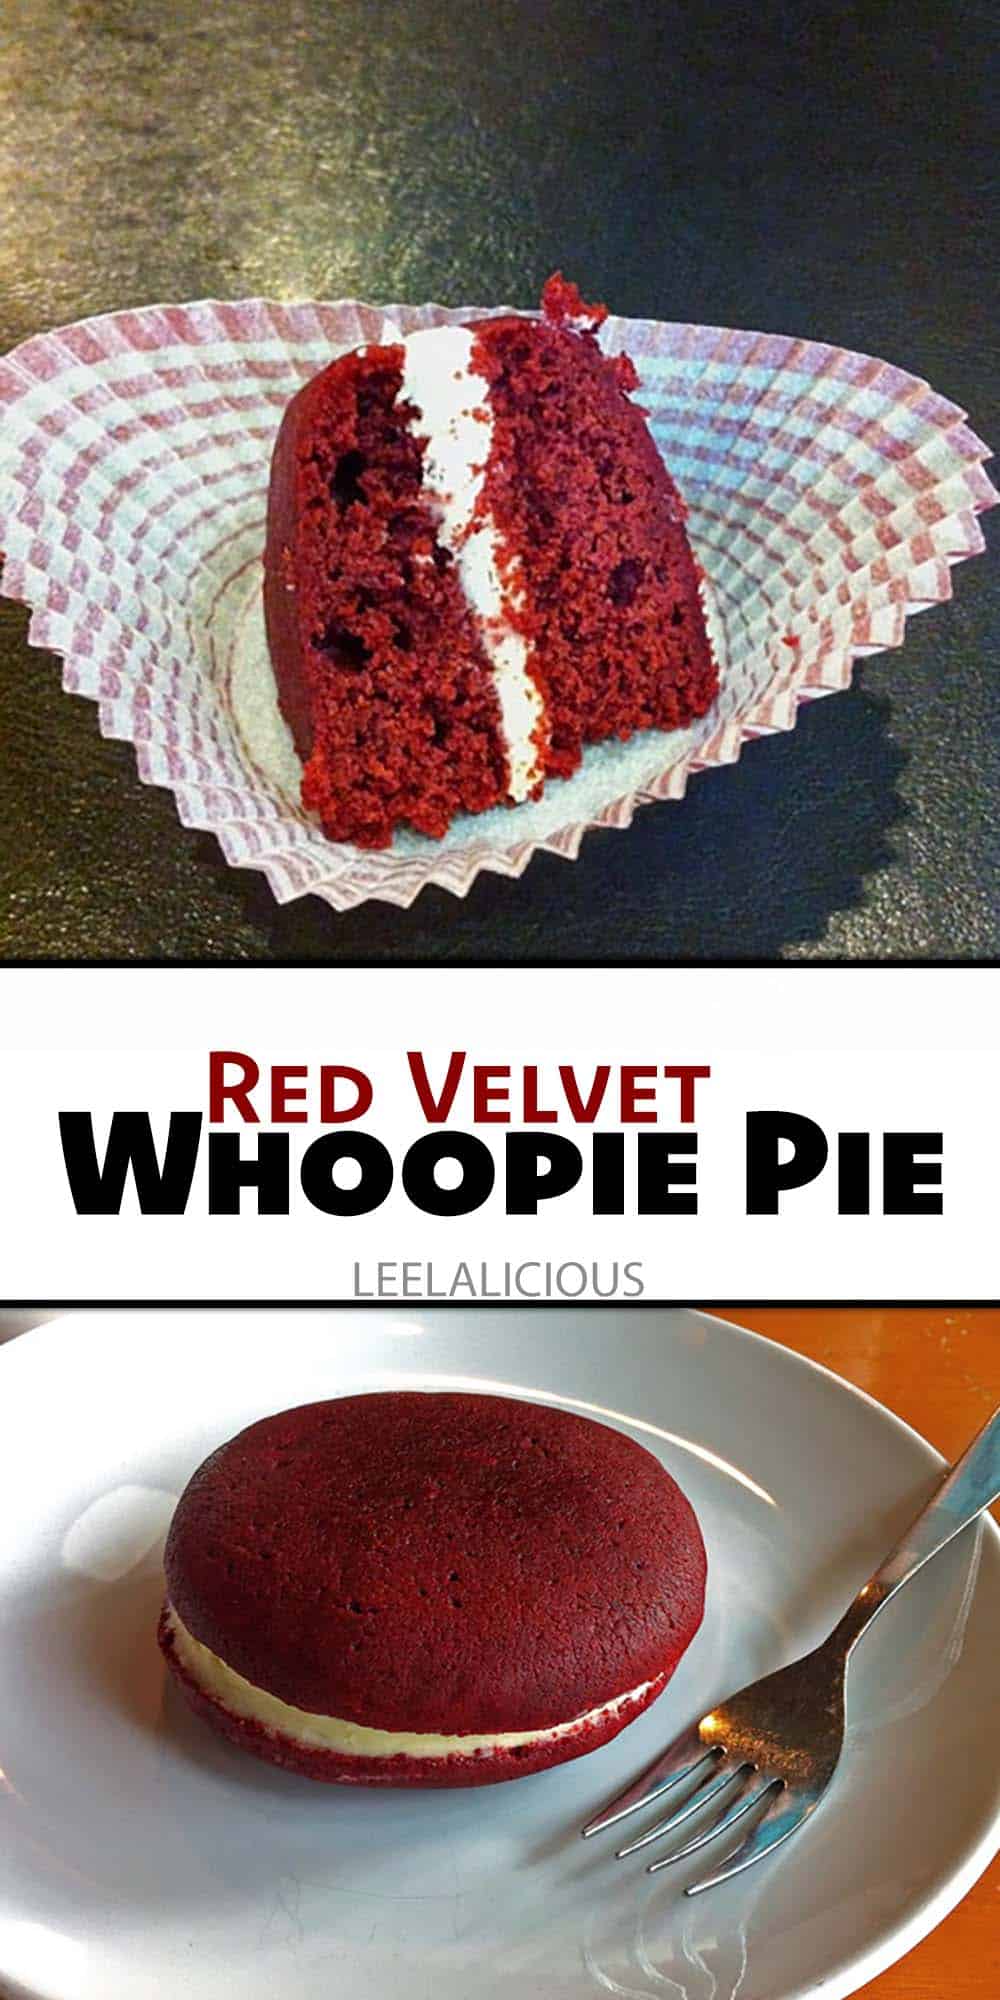 Red Velvet Whoopie Pie